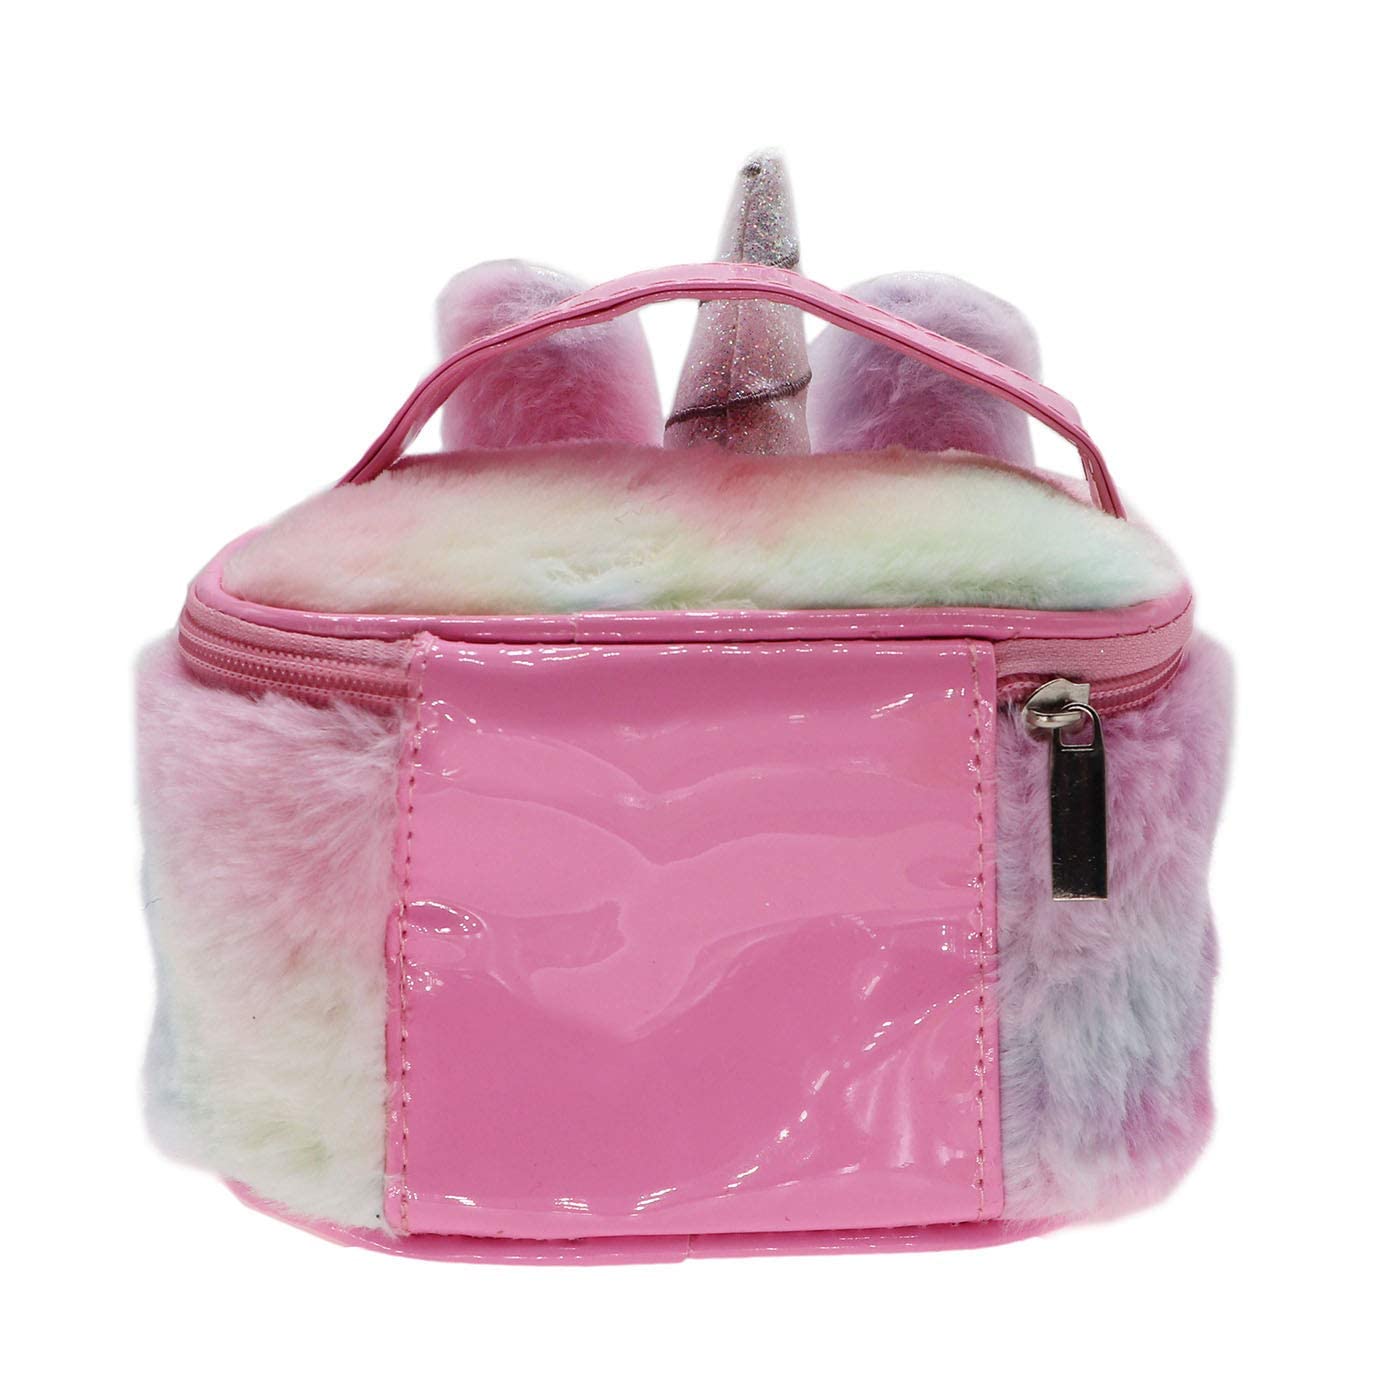 Newfancy Women Girls Kids Fluffy Faux Fur Unicorn Makeup Bag Small Cosmetic Organizer Plush Travel Storage Bags Toiletry Kit Case